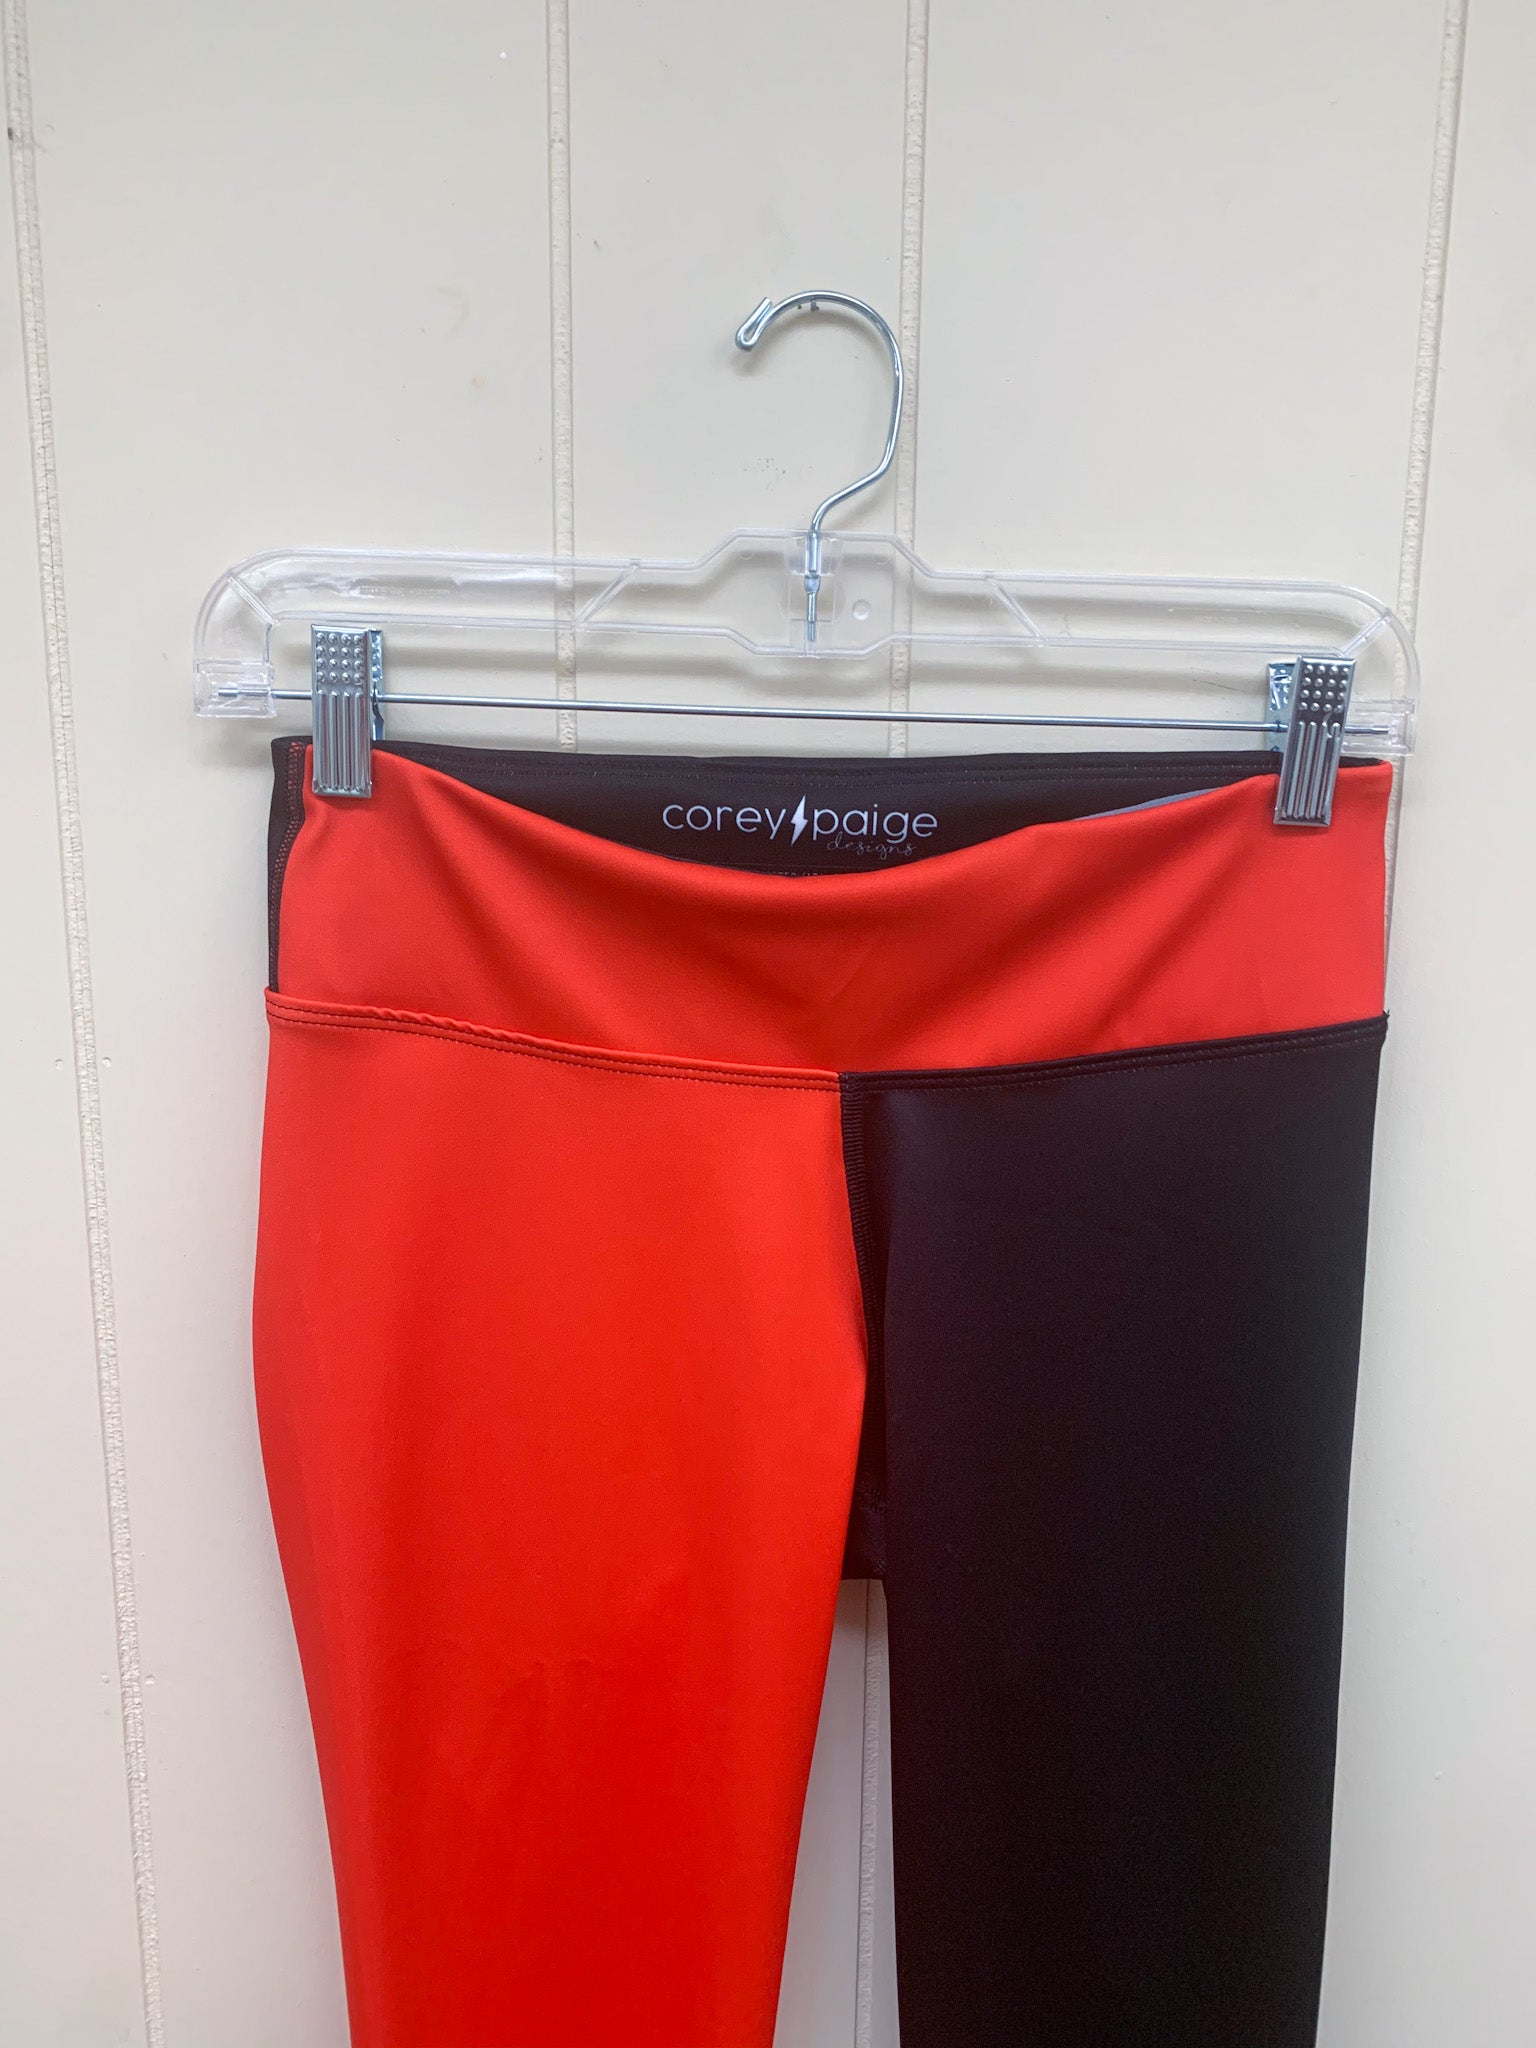 Red & Black Half Color Leggings